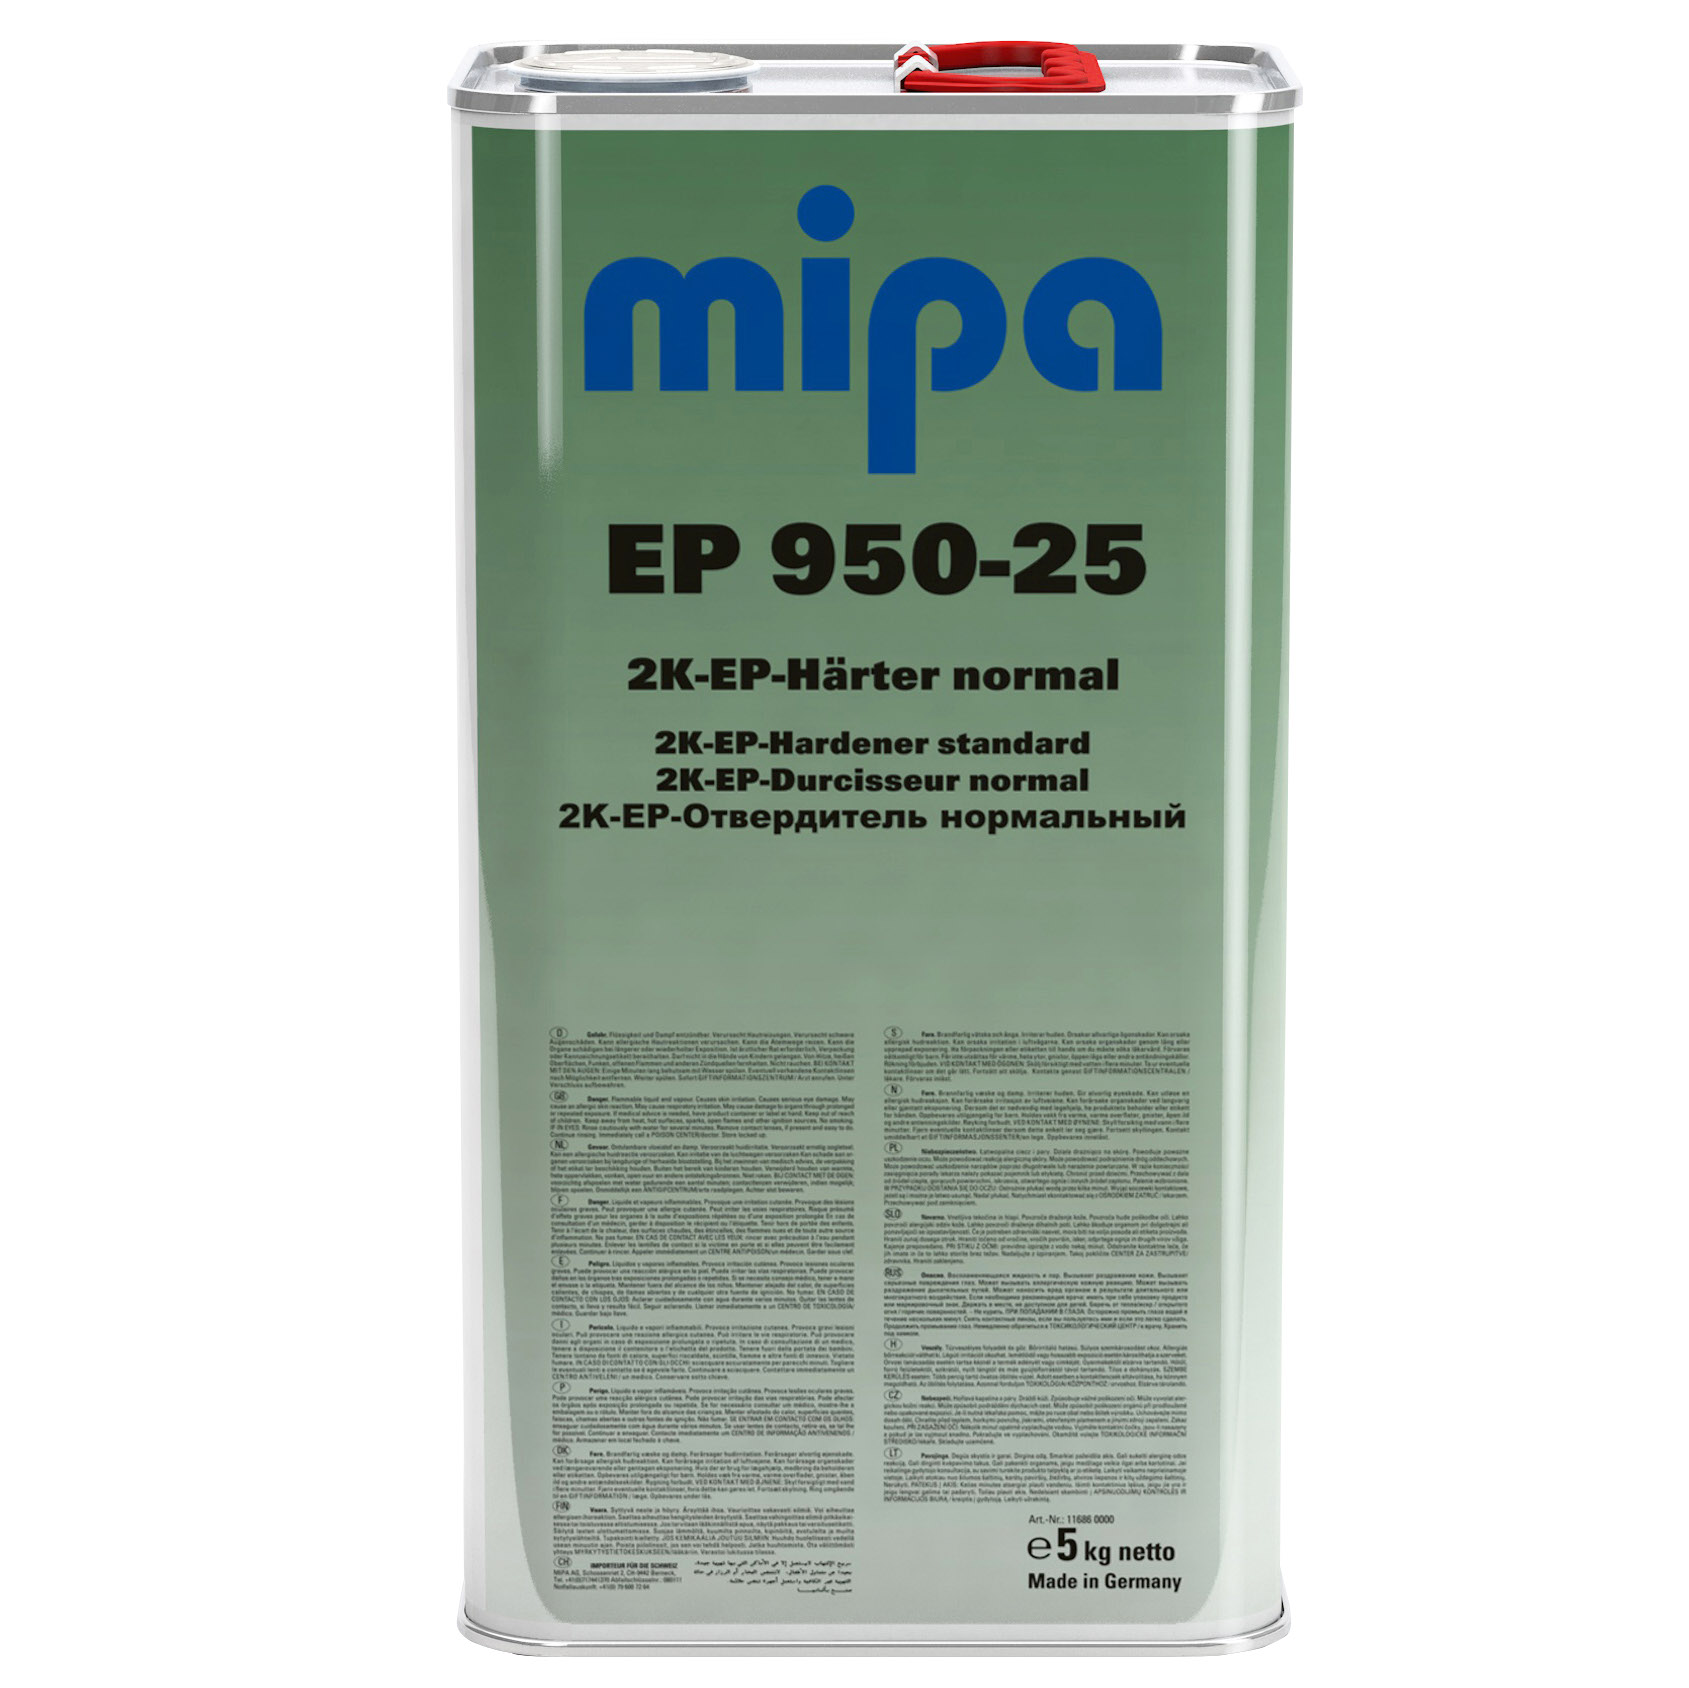 Mipa EP 950-25 2K-EP-Härter, 5 kg